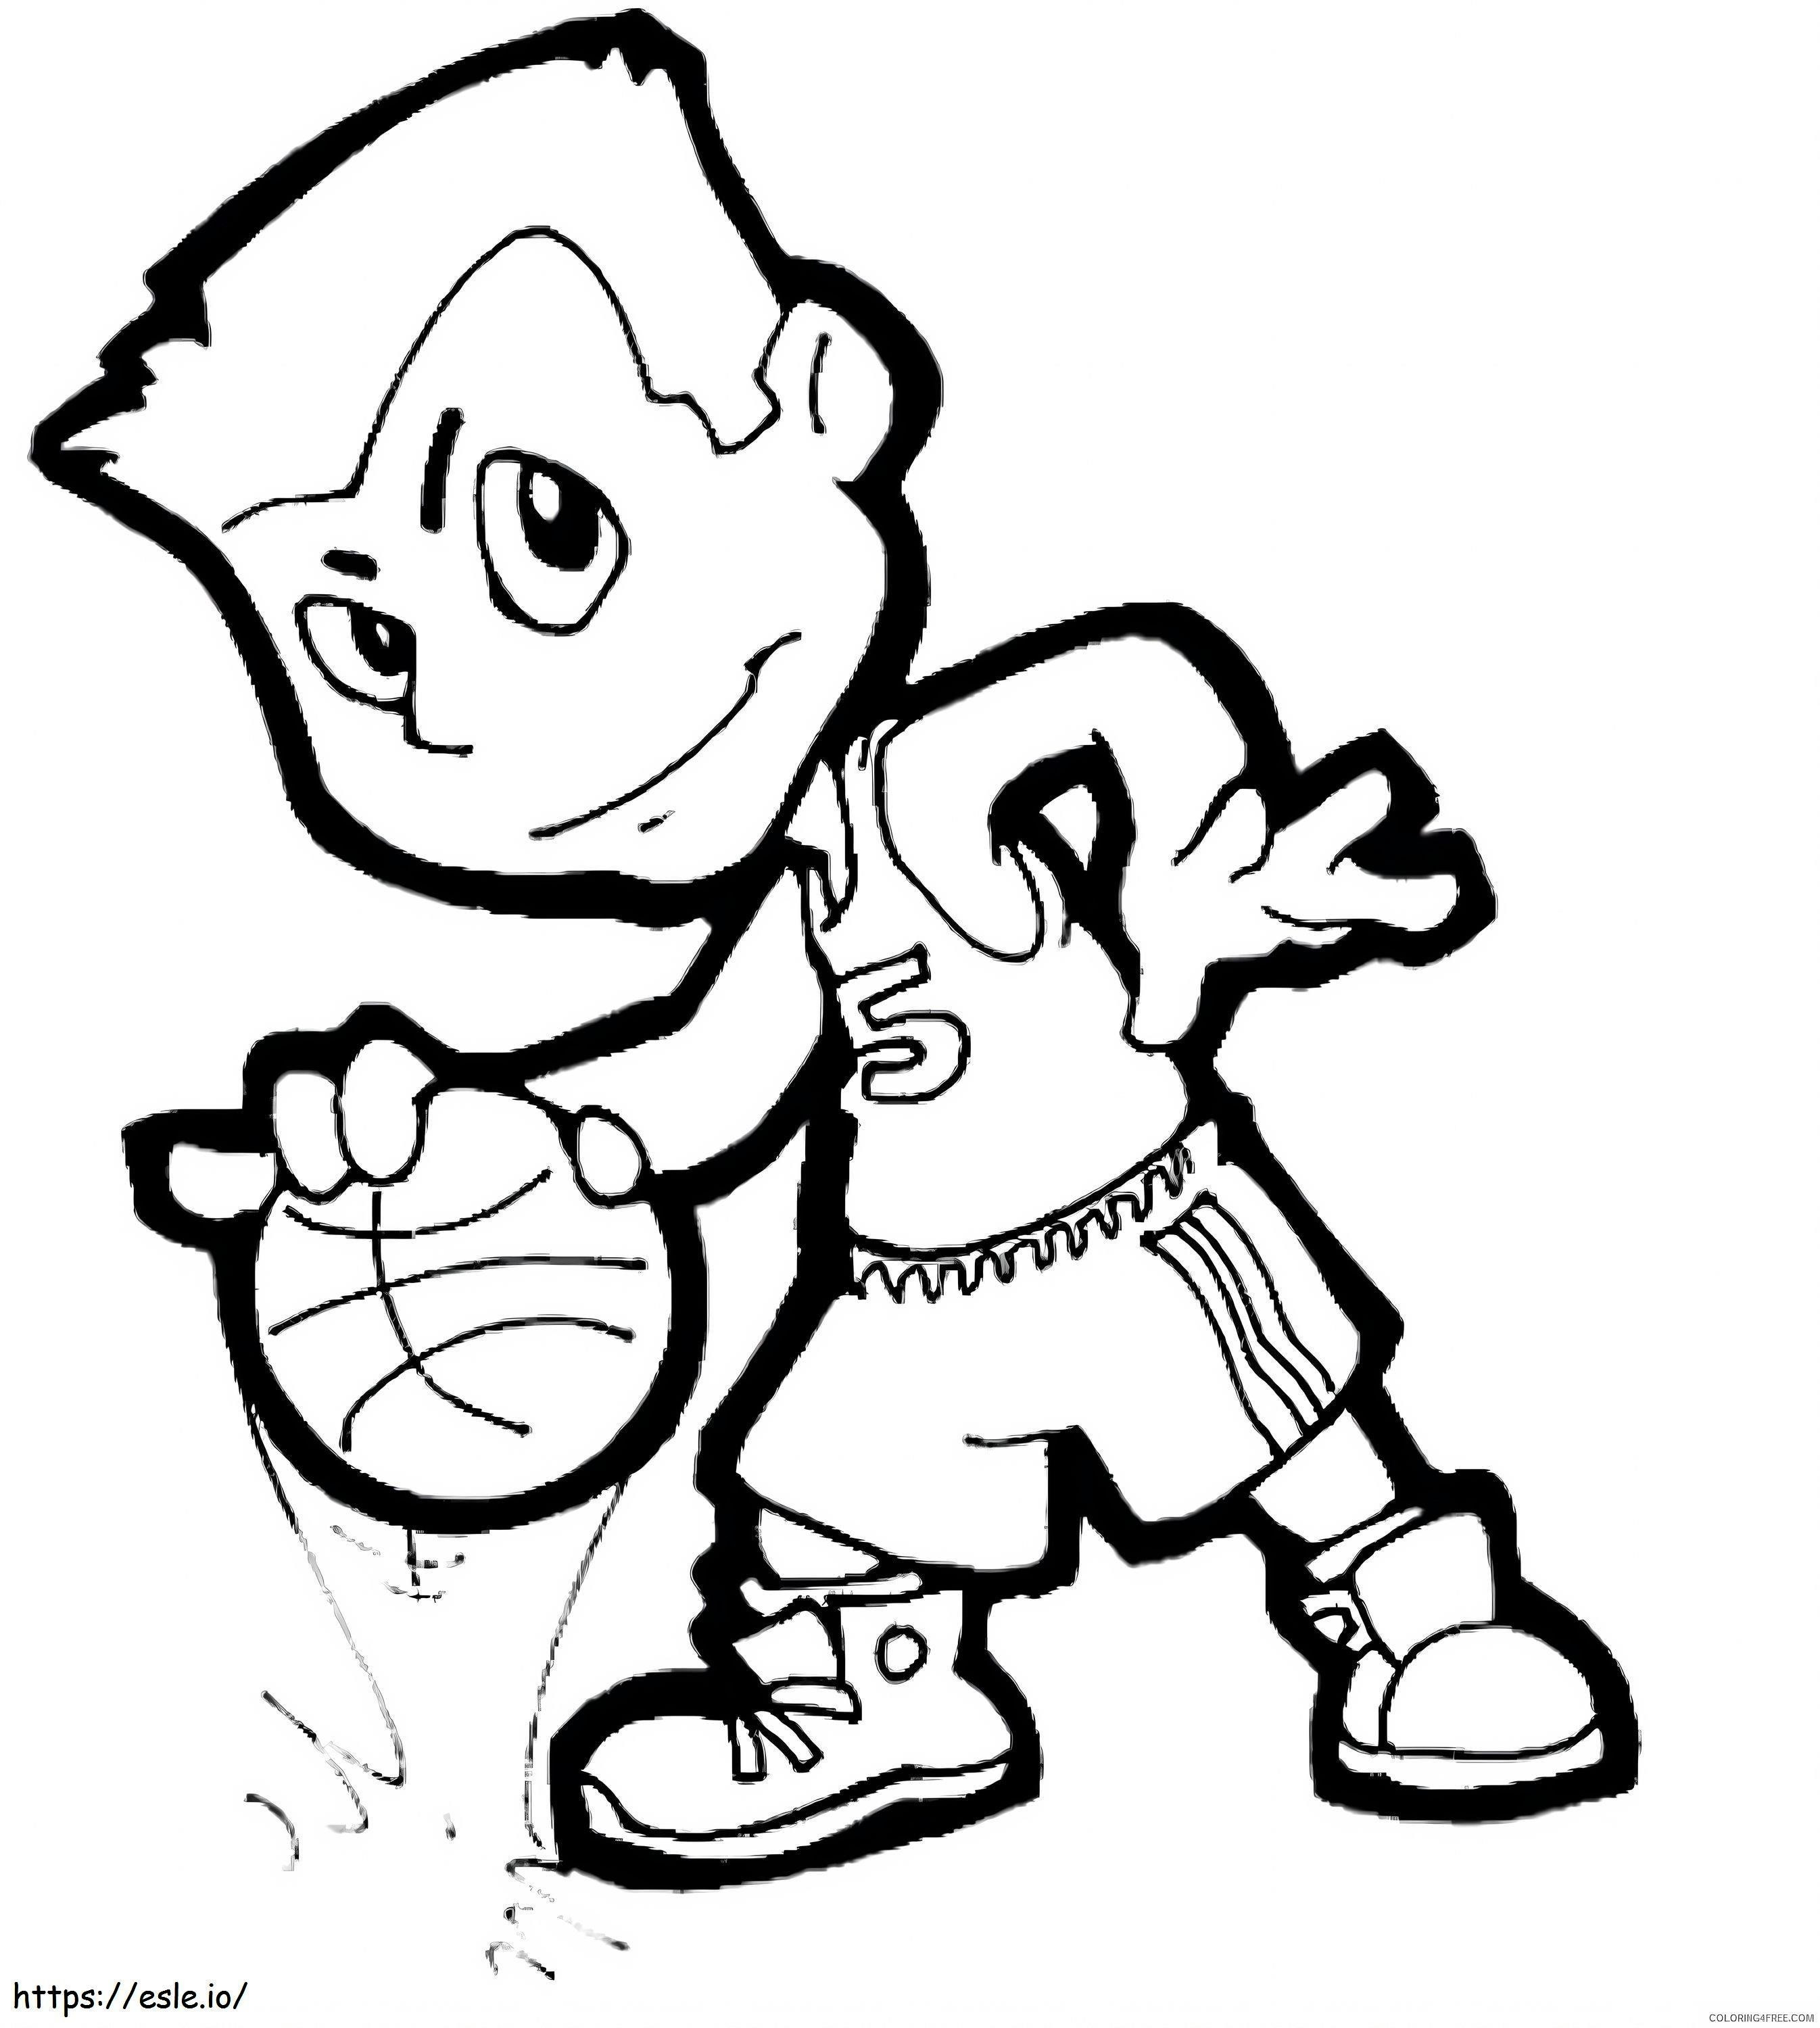 Basketball Cartoon coloring page